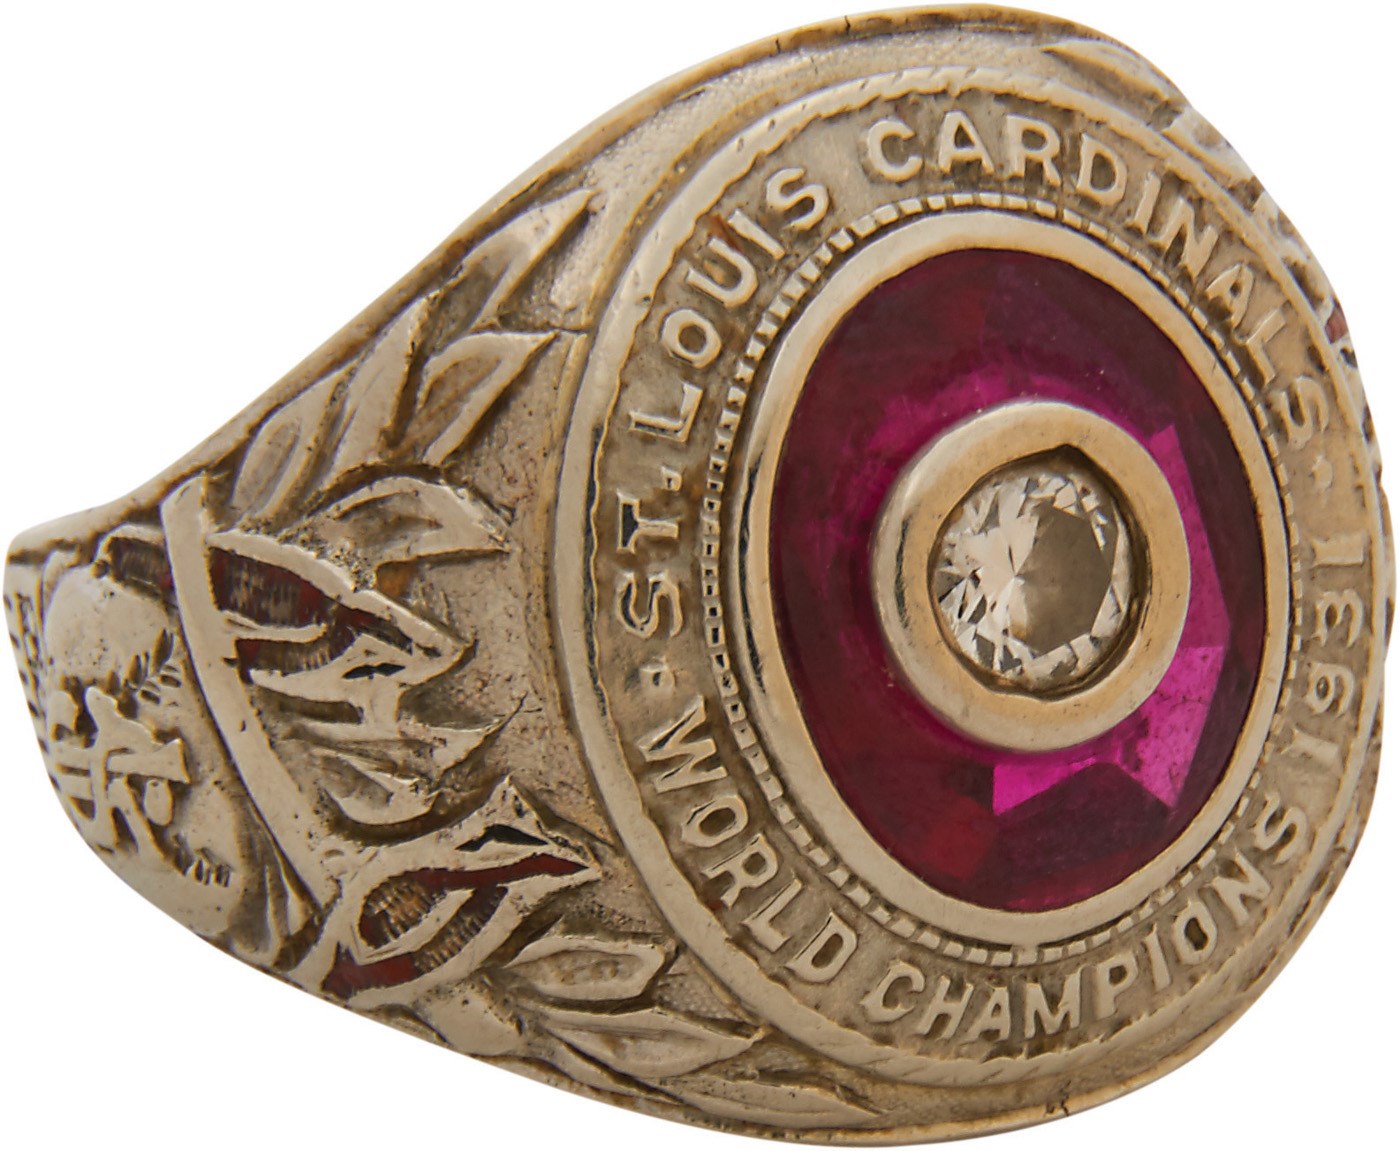 1931 St. Louis Cardinals World Series Championship Ring